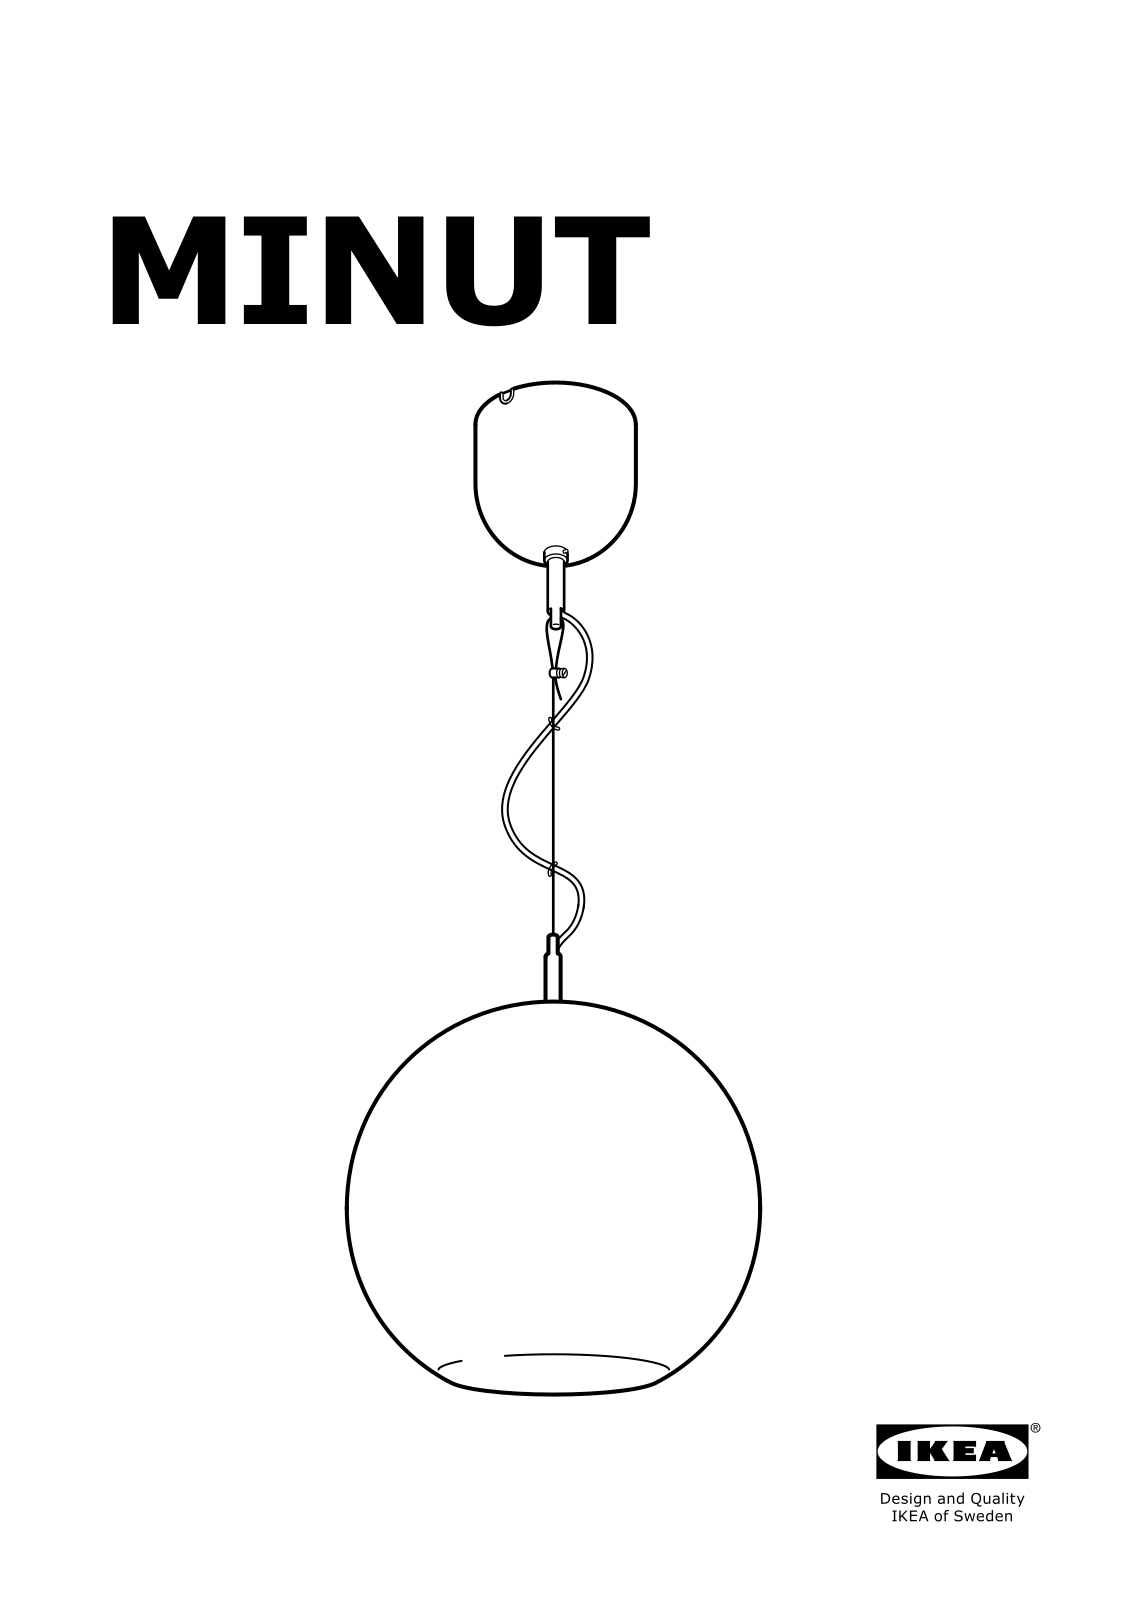 IKEA MINUT User Manual